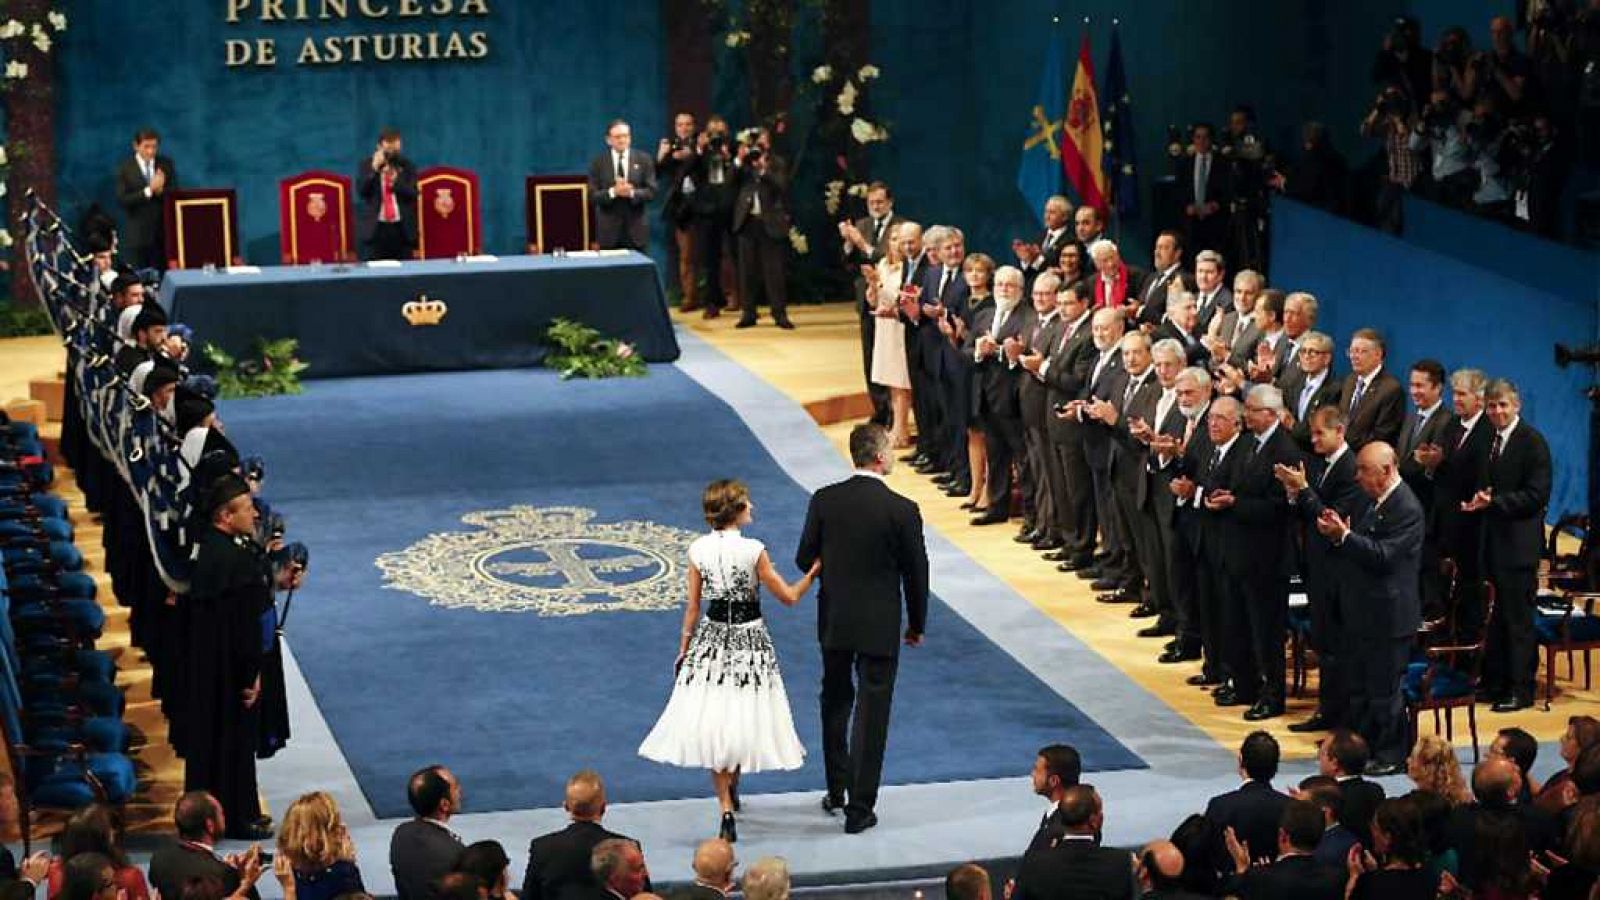 informe Premios Princesa de Asturias 211017 2140 - RTVE.es